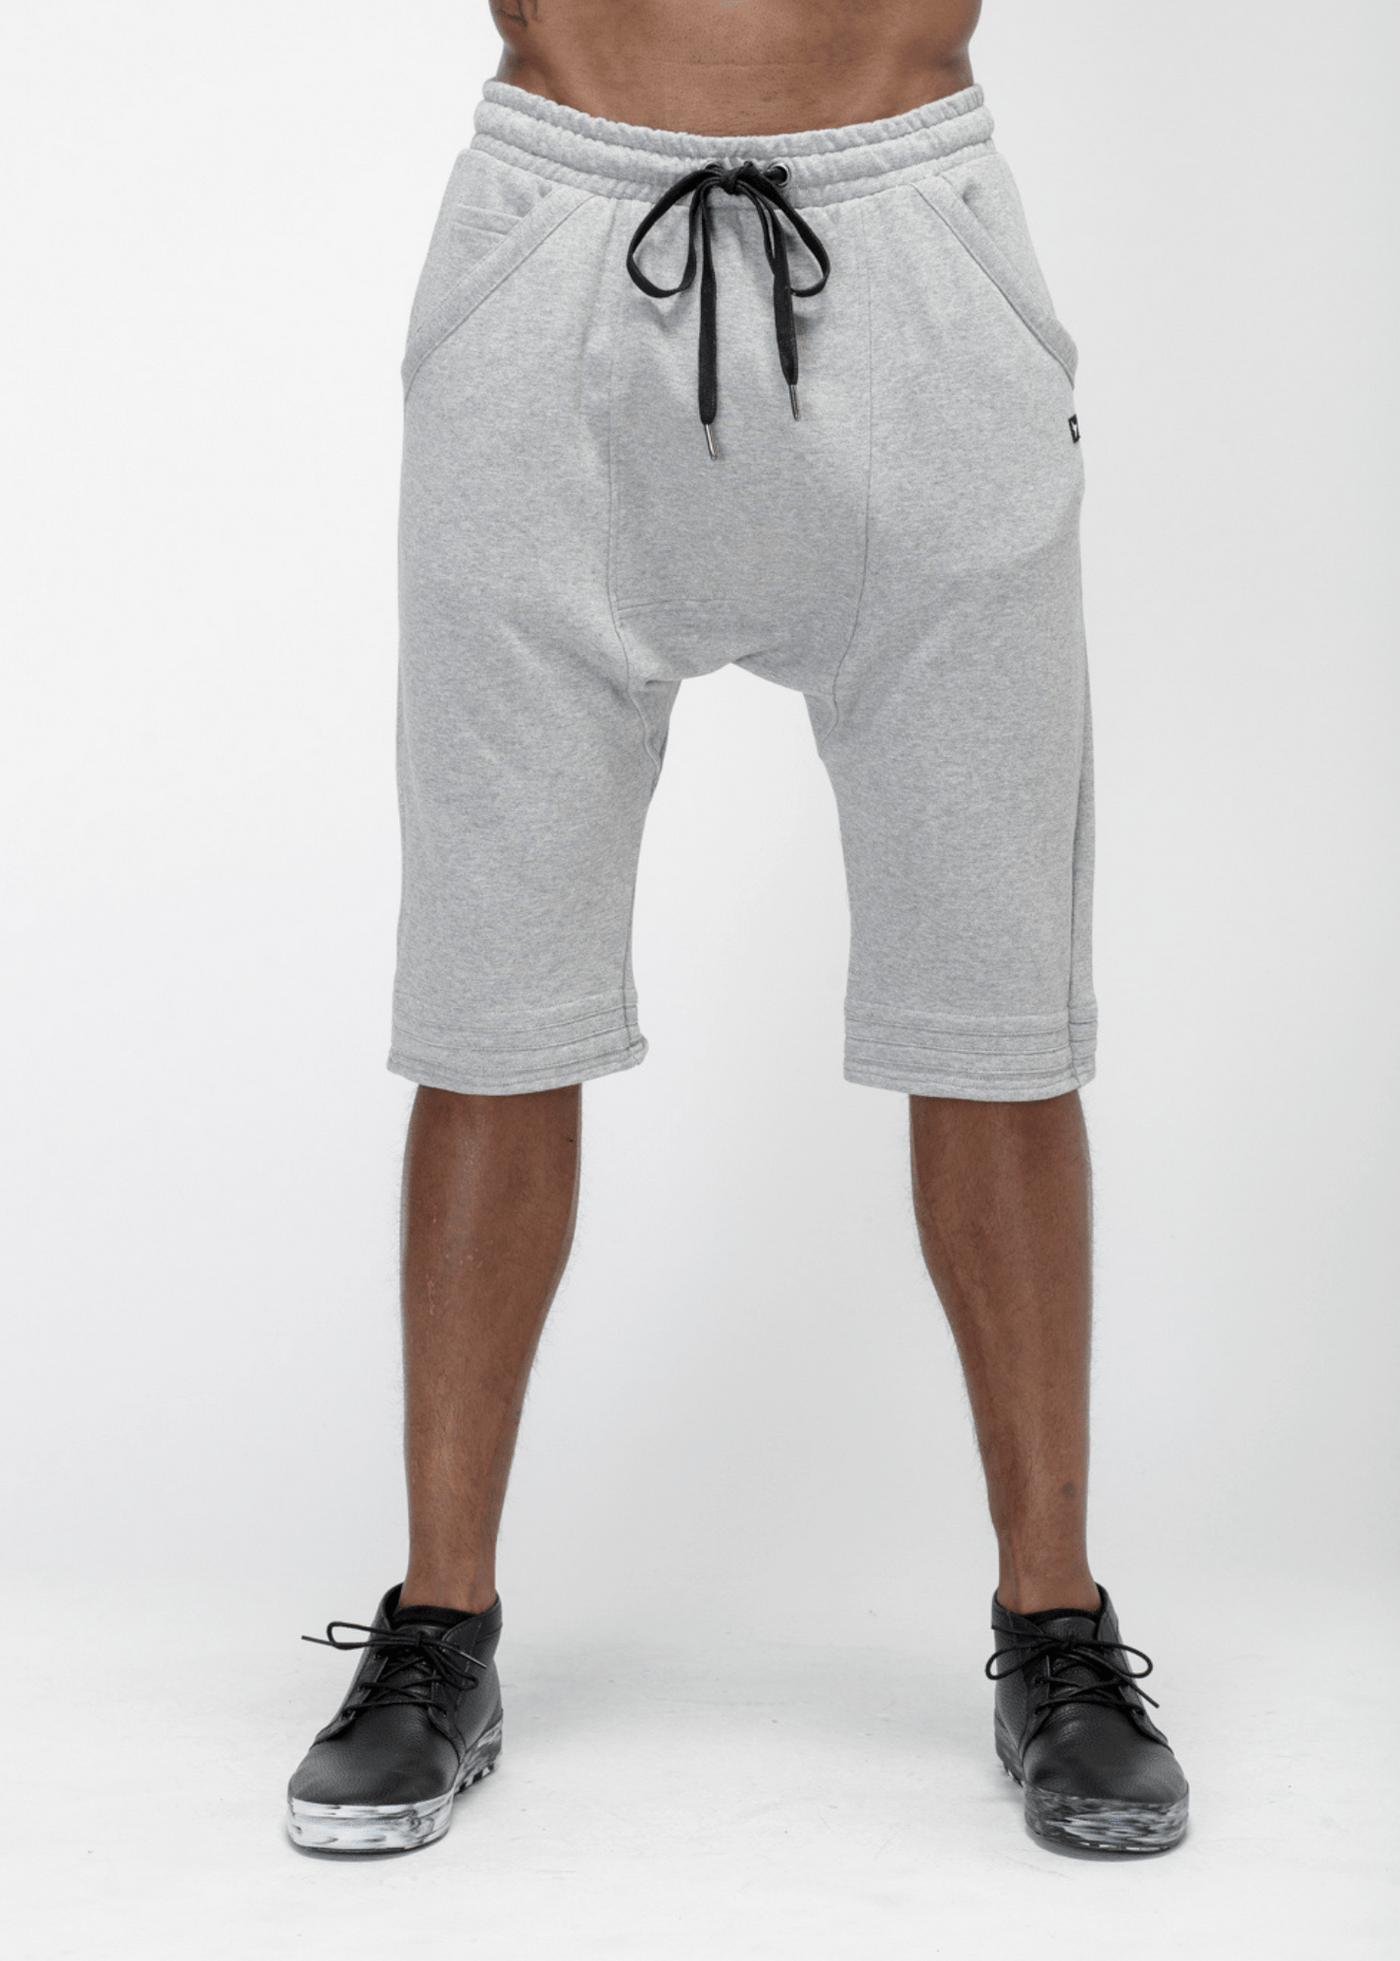 Konus Men's Loose End Shorts in Gray by Shop at Konus